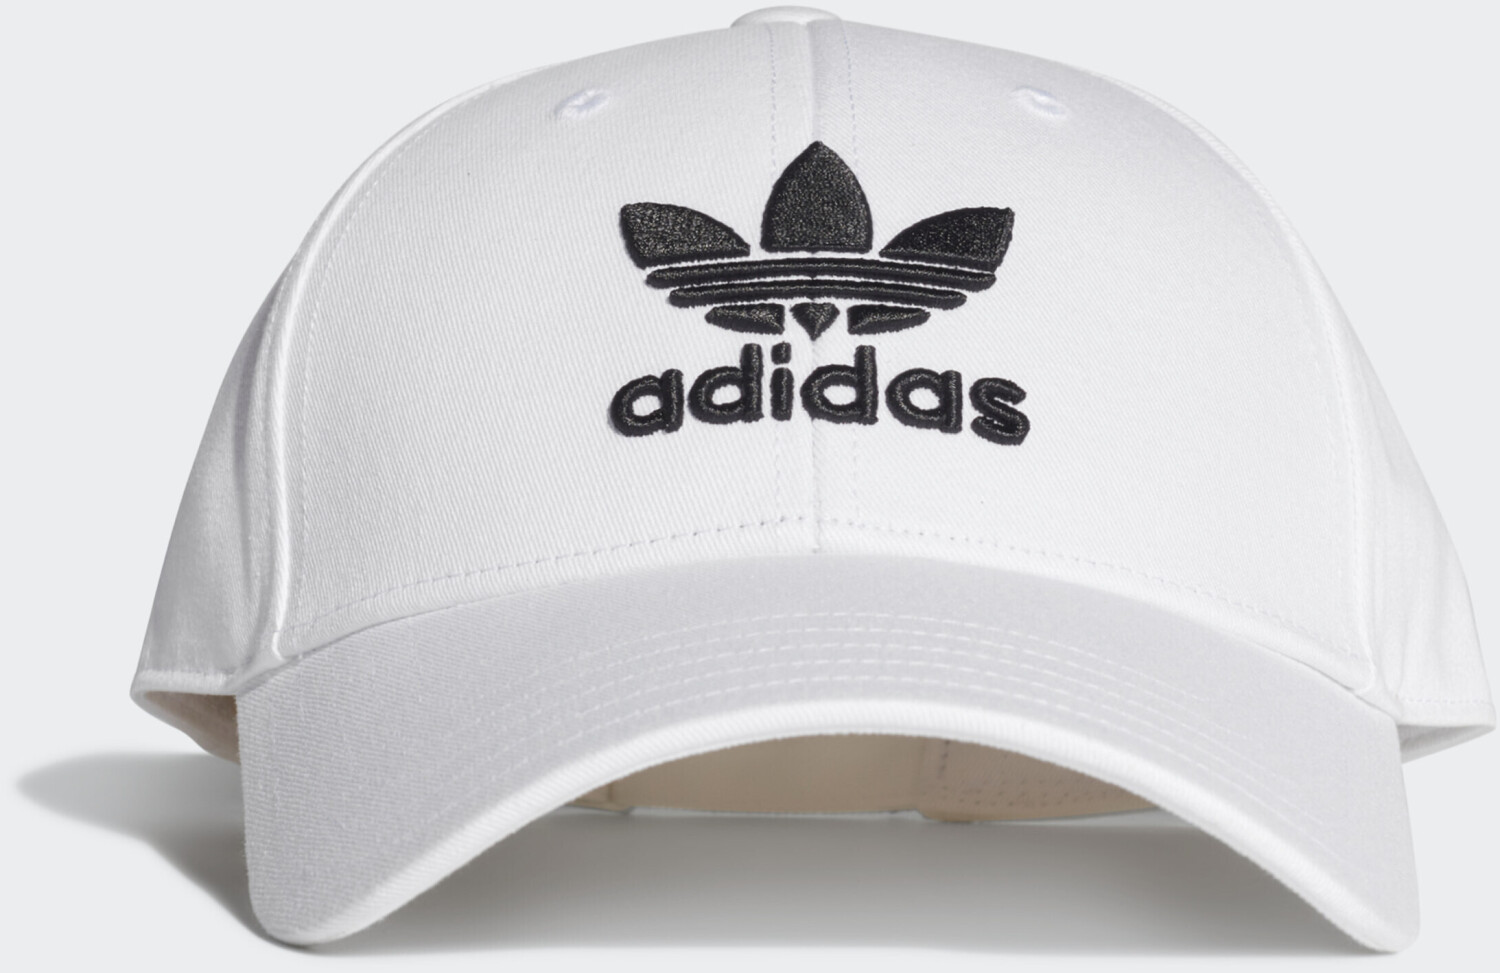 Adidas Trefoil Baseball Kappe (FJ2544) white/black ab 11,49 € |  Preisvergleich bei